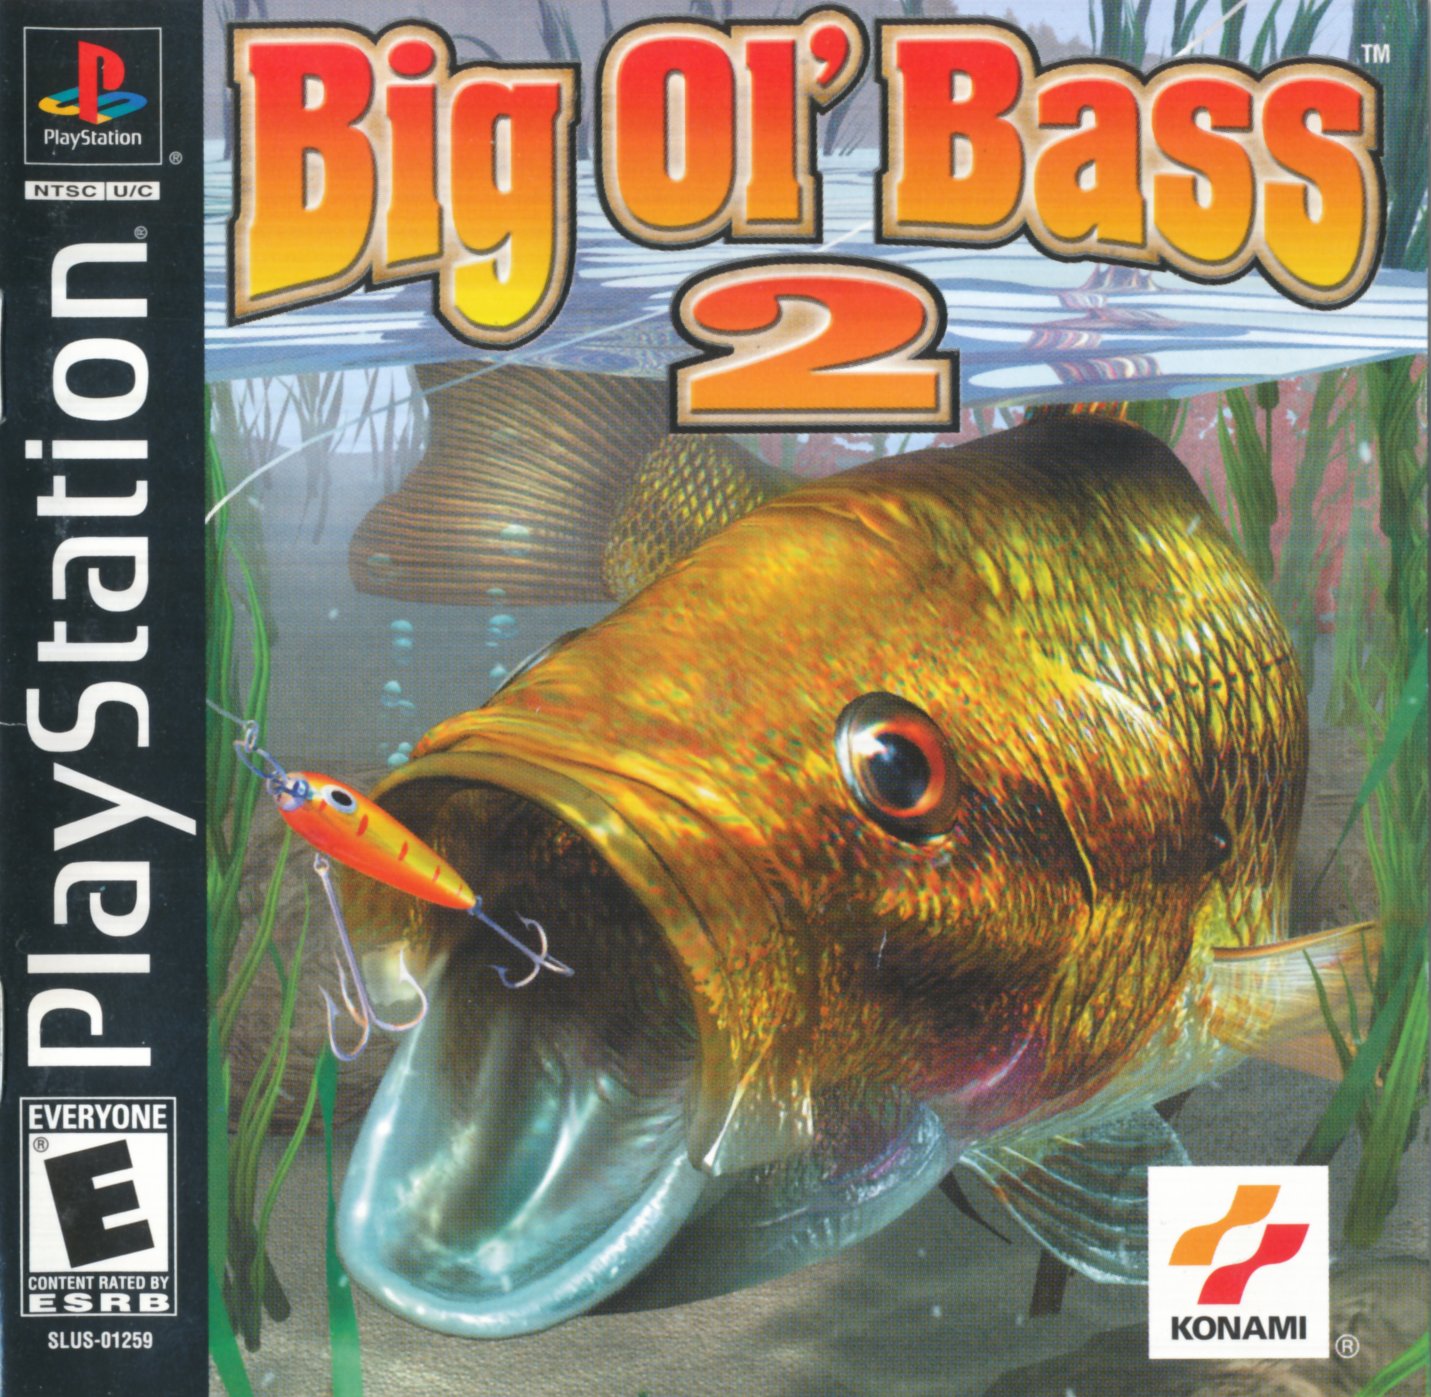 Big Ol' Bass 2 PSX cover